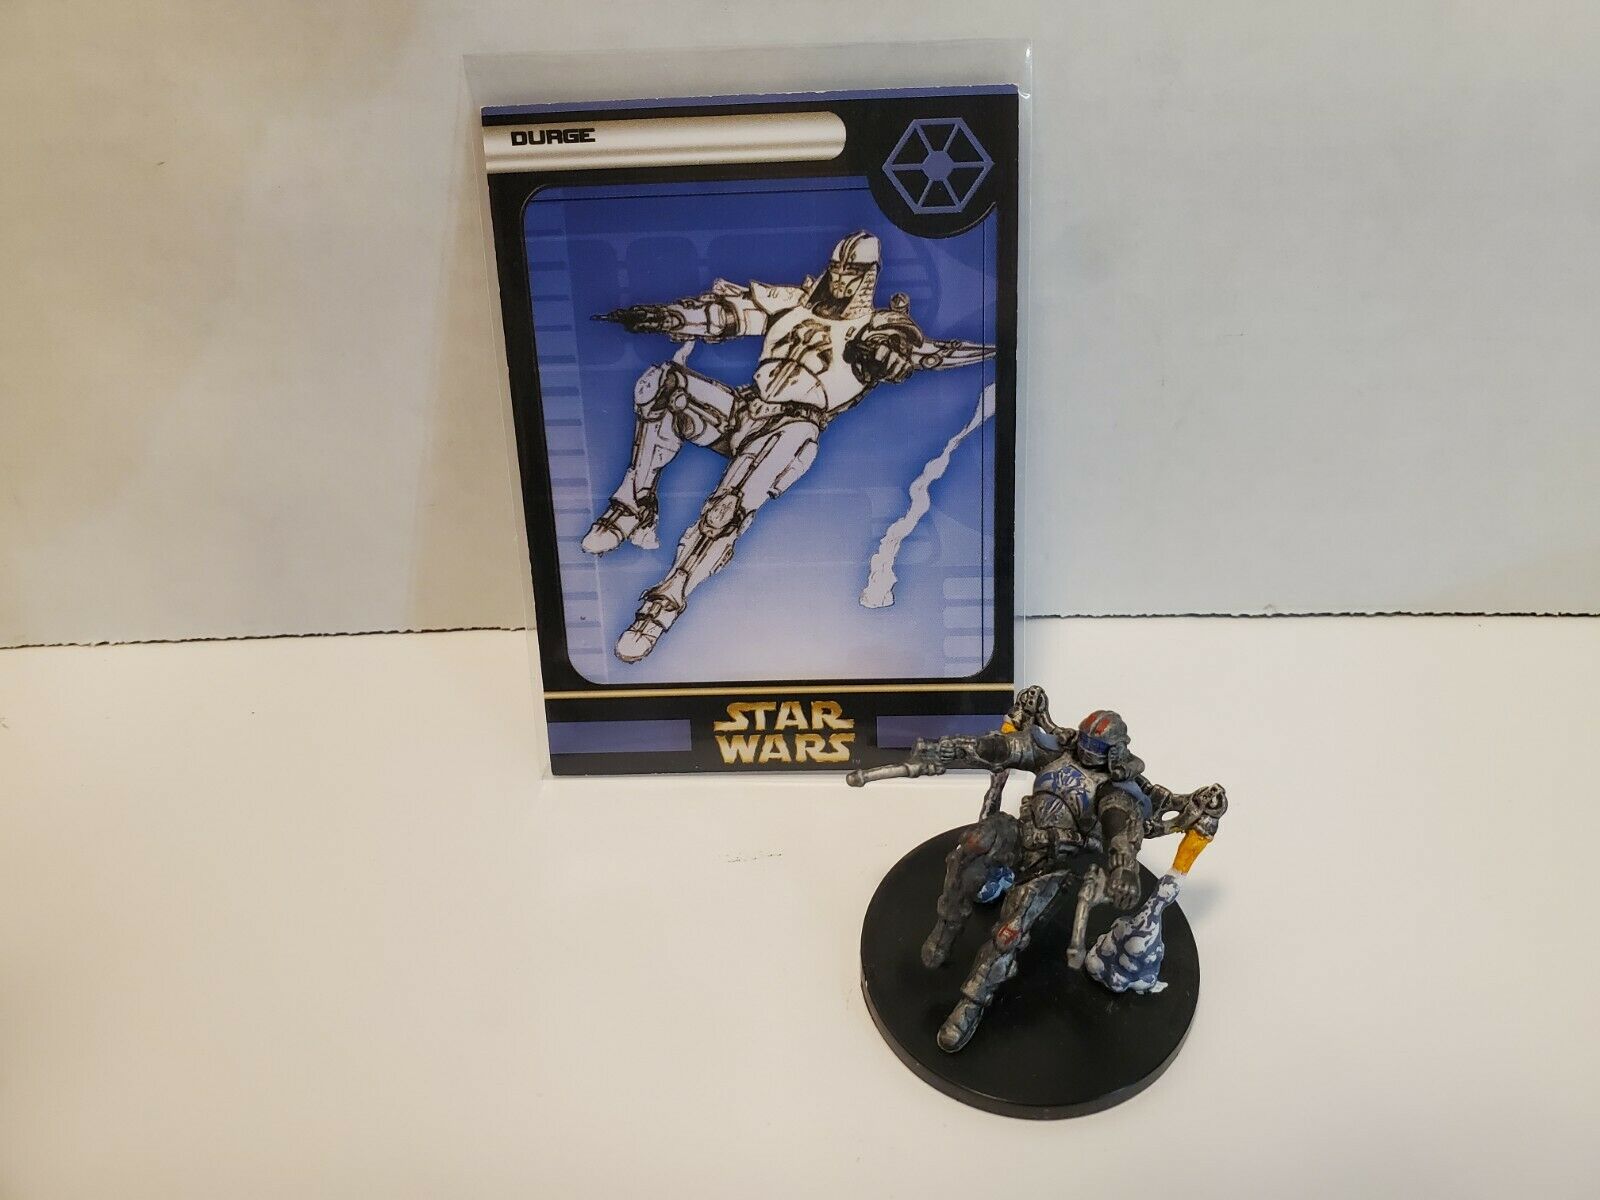 Star Wars Wotc Miniatures Durge Rare #38/60 W/card 2004